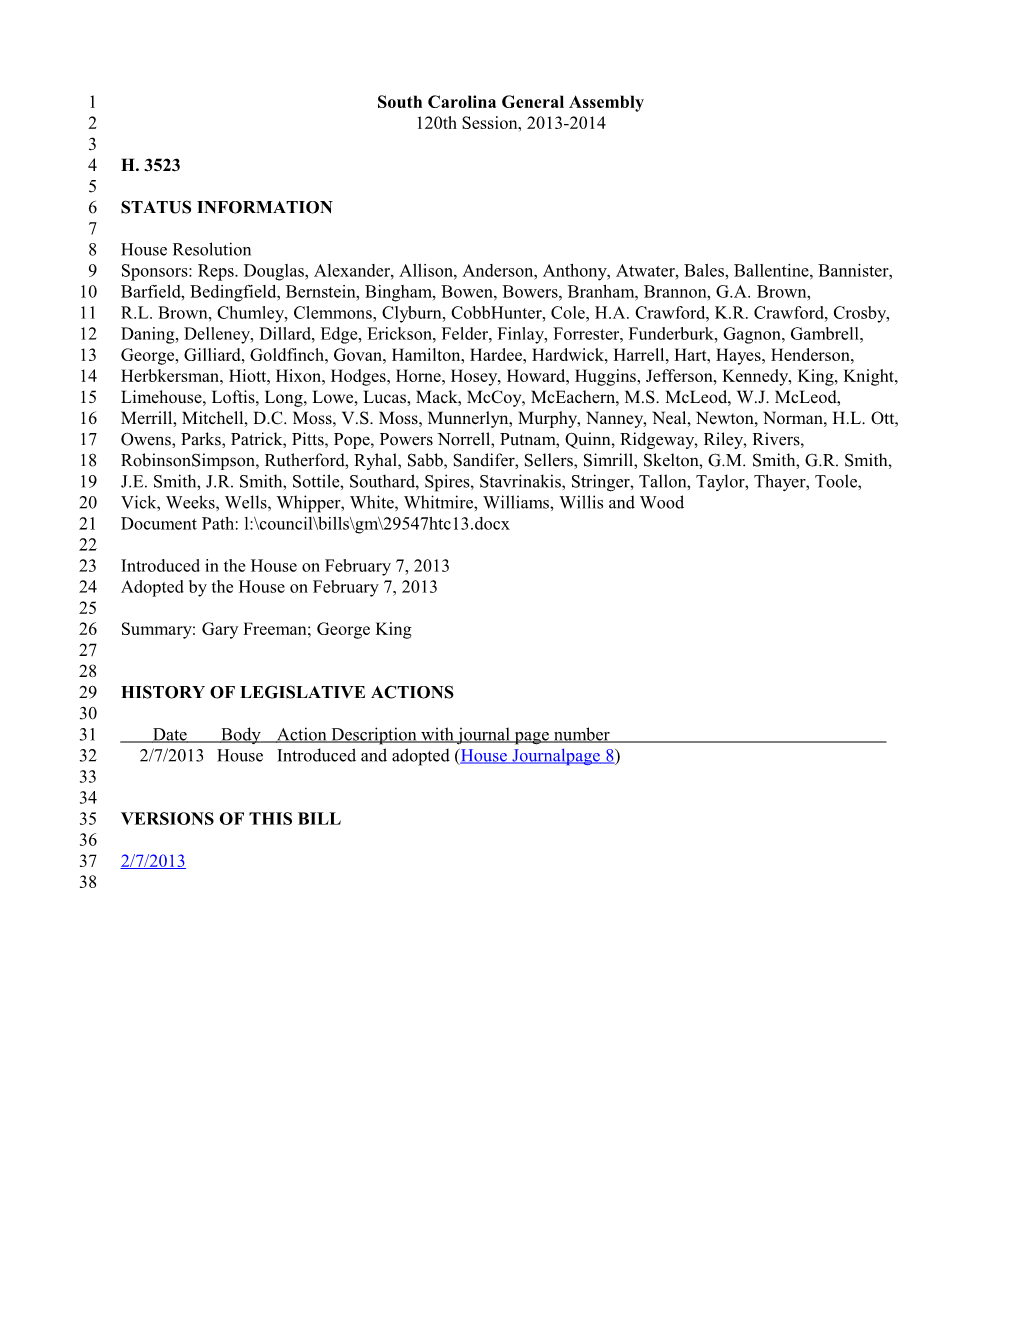 2013-2014 Bill 3523: Gary Freeman; George King - South Carolina Legislature Online